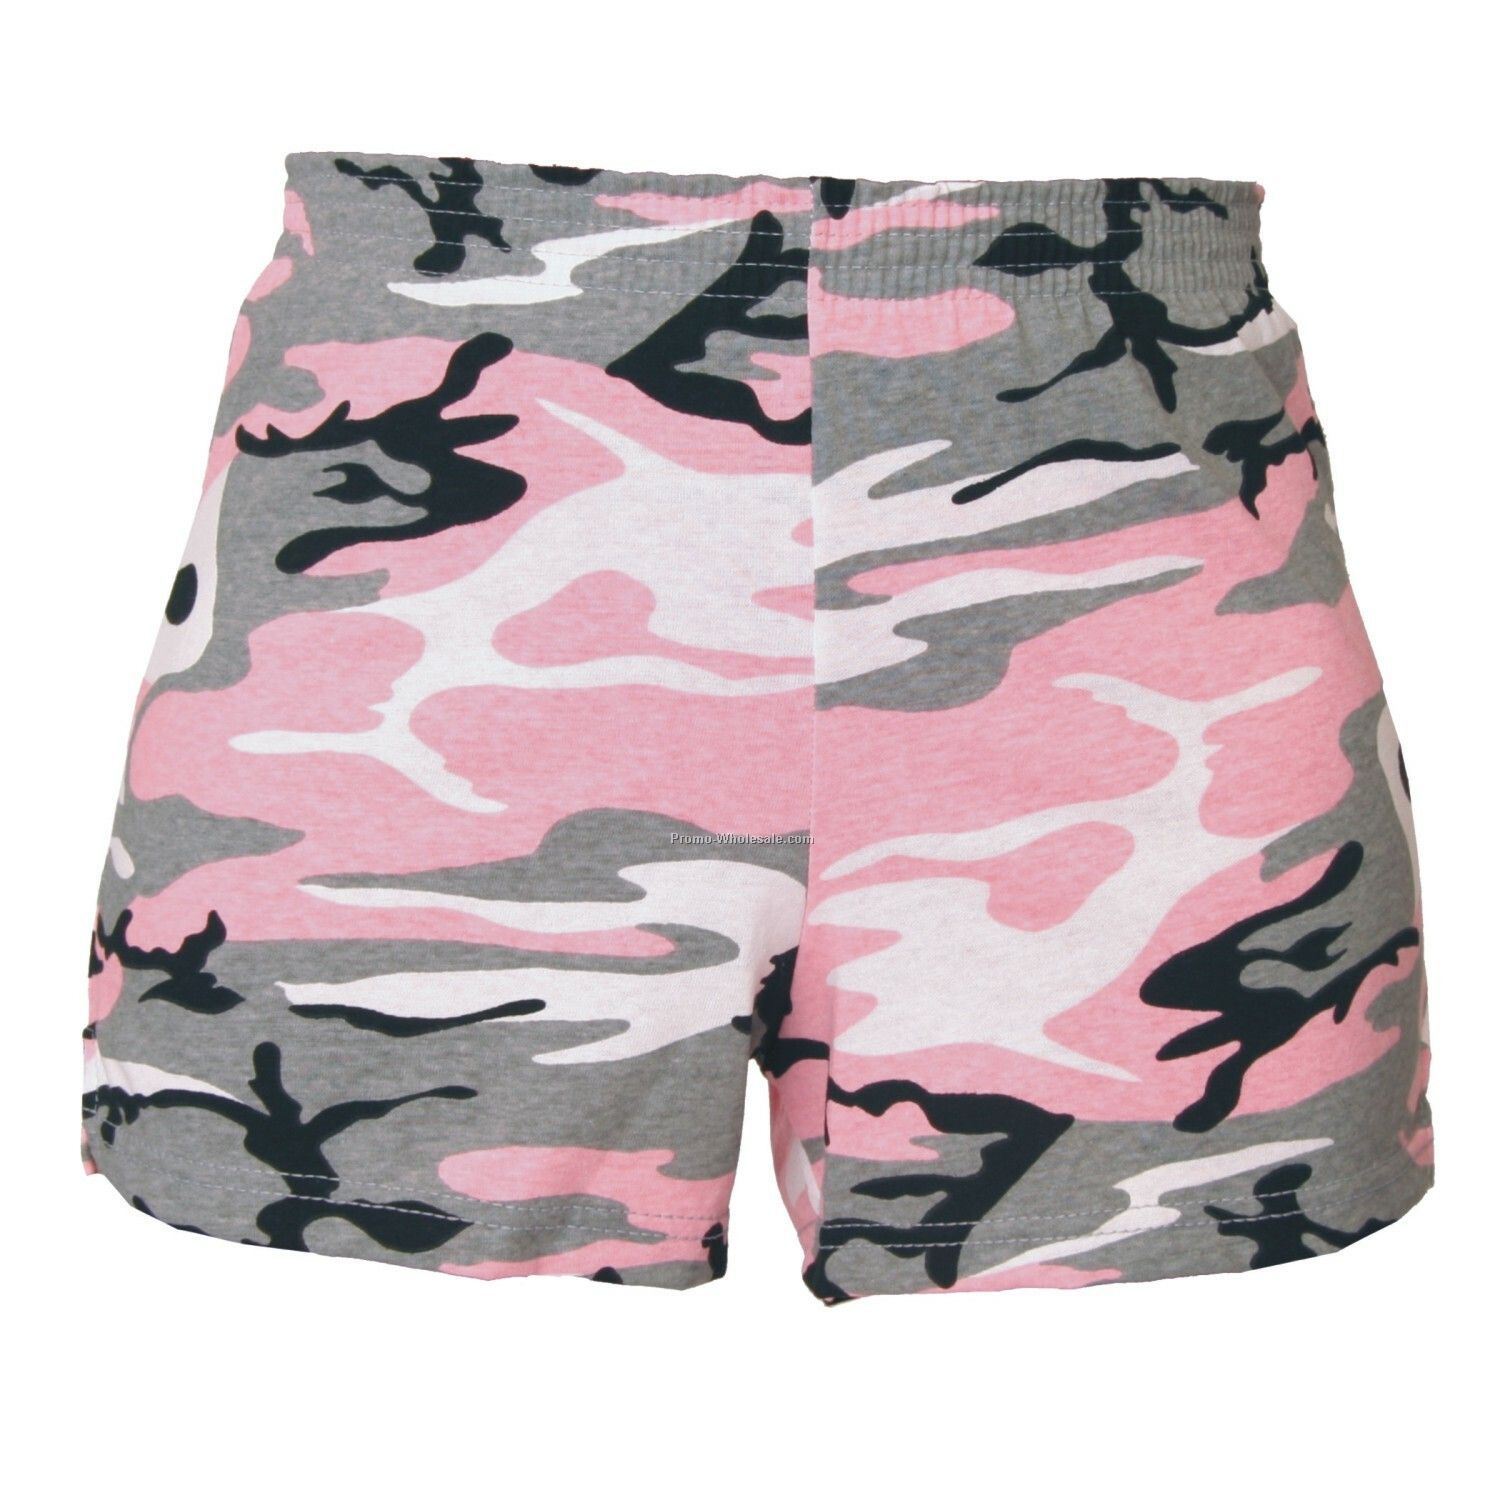 Adults' Pink Camouflage Novelty Spirit Shorts (Xs-xl)